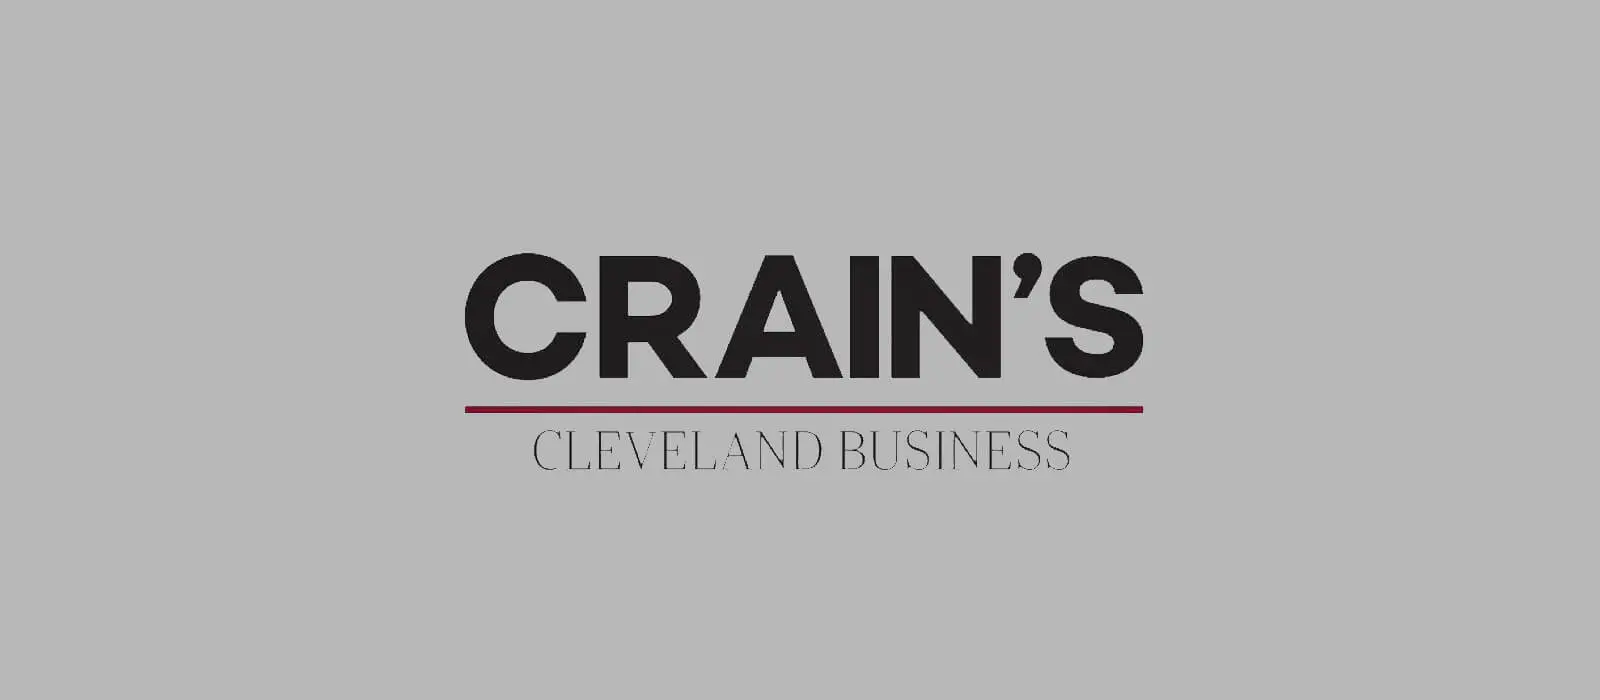 Weston & Associates Featured Crain's Cleveland Business blog image